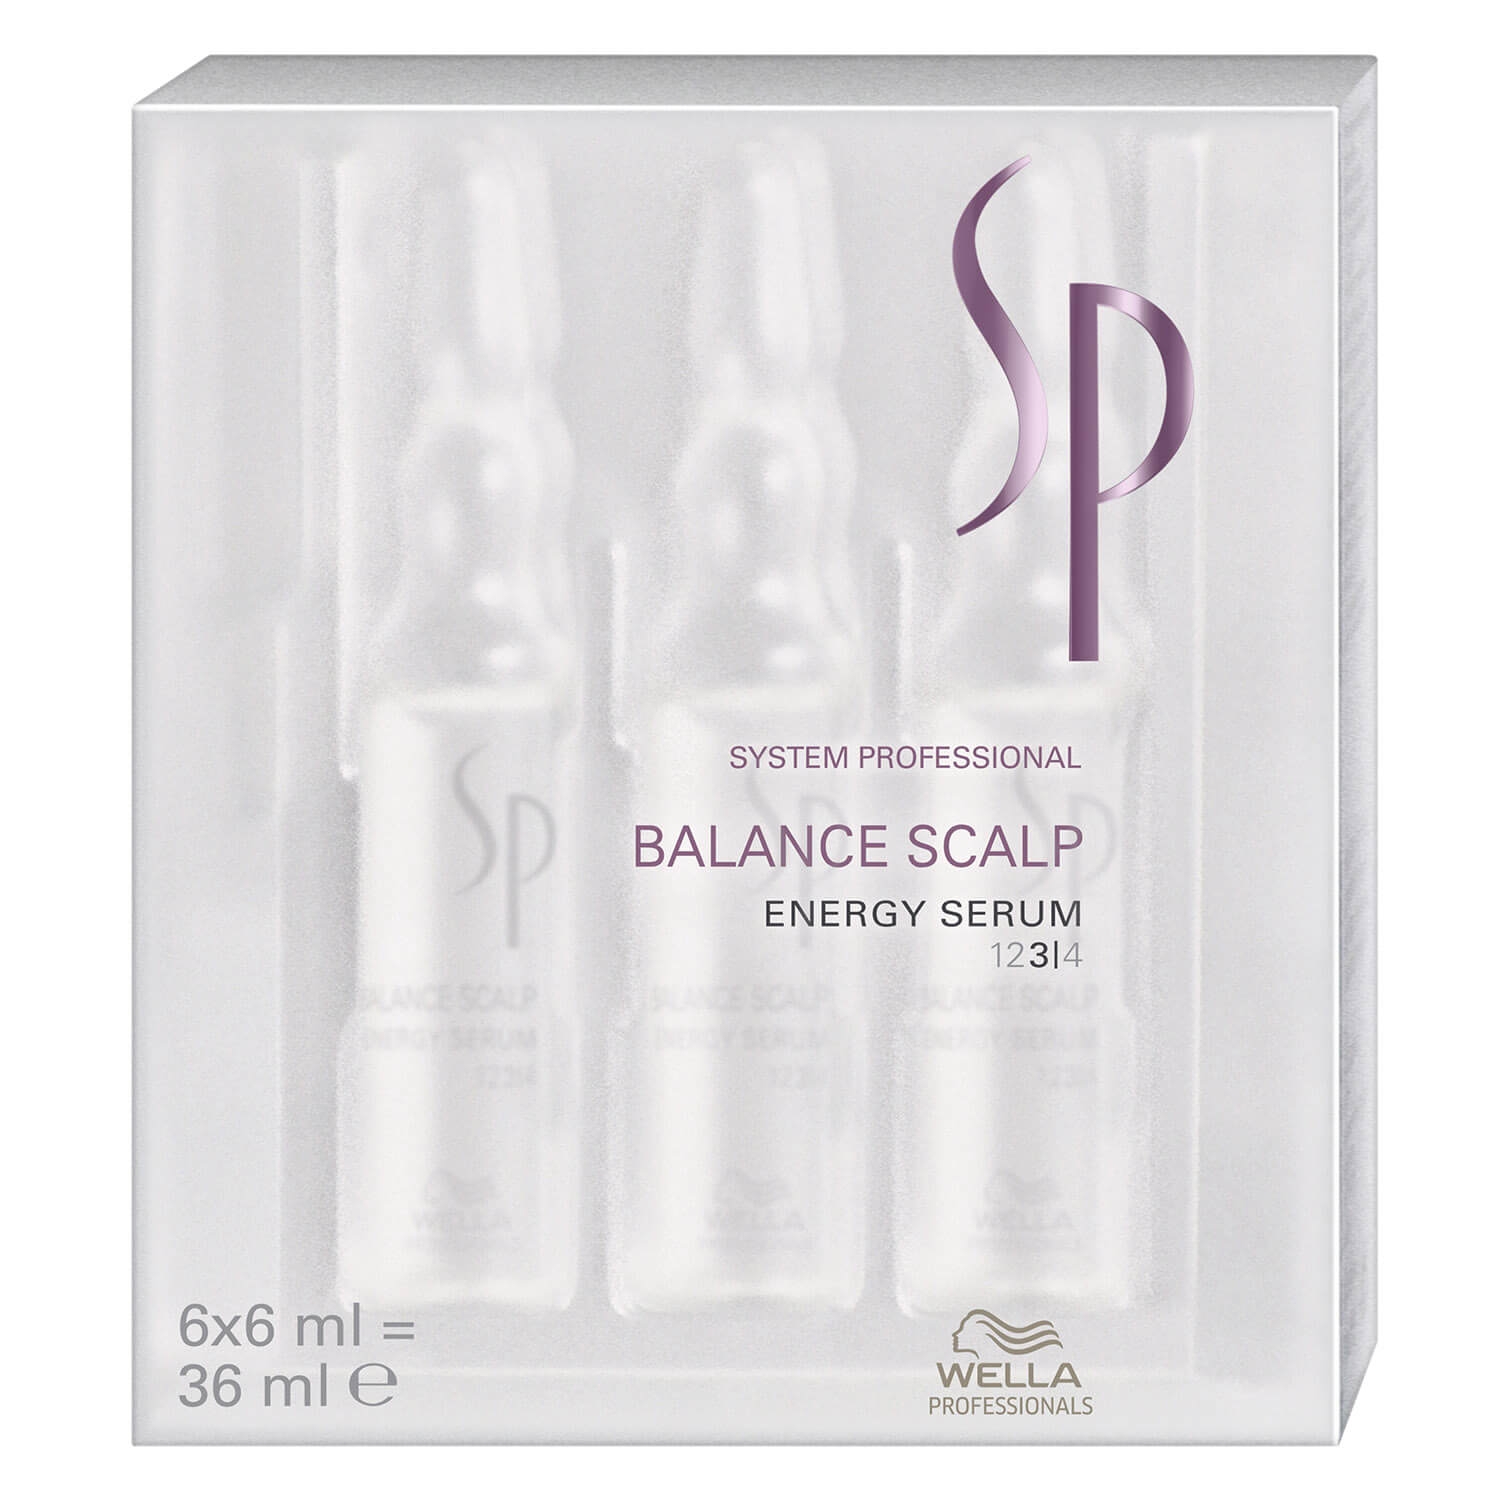 Product image from SP Balance Scalp - Energy Serum